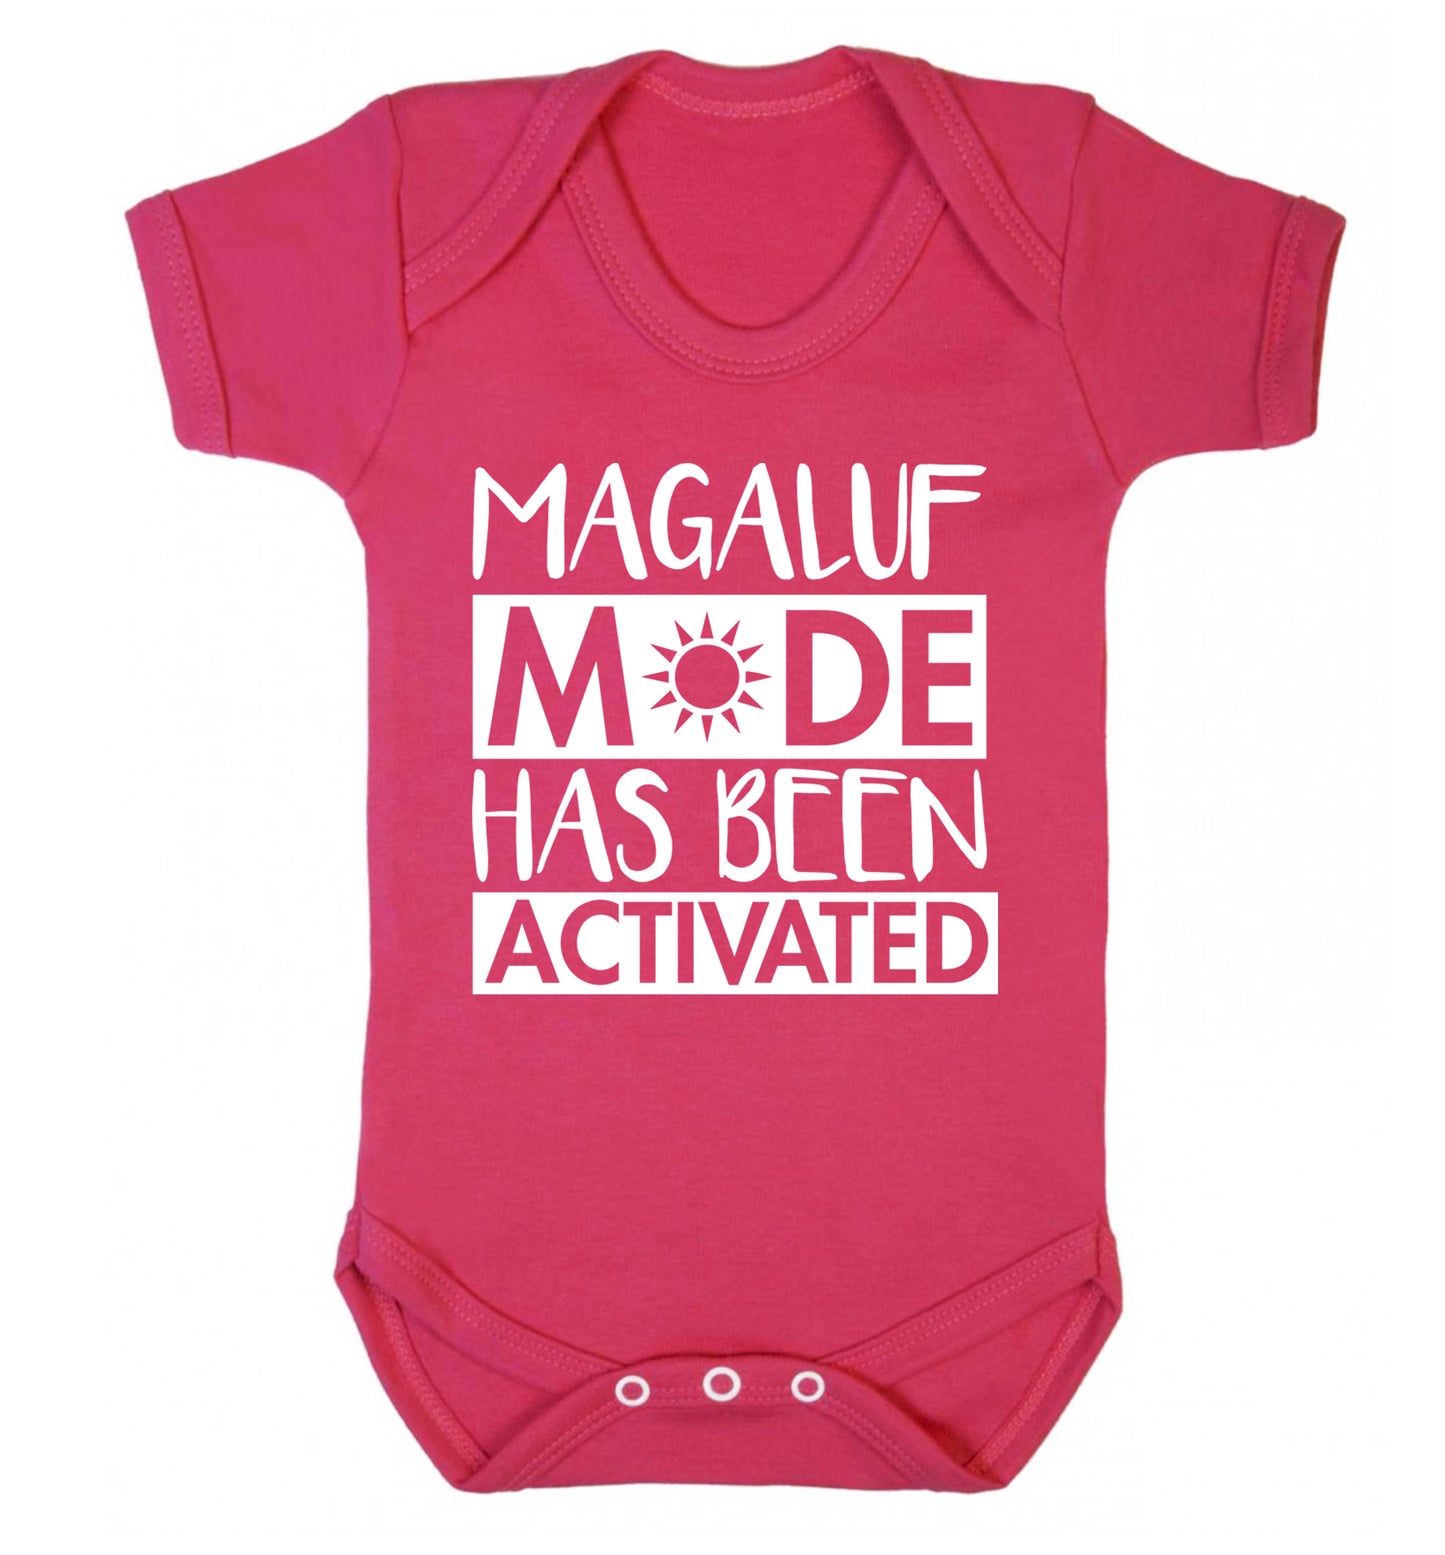 Magaluf mode has been activated Baby Vest dark pink 18-24 months